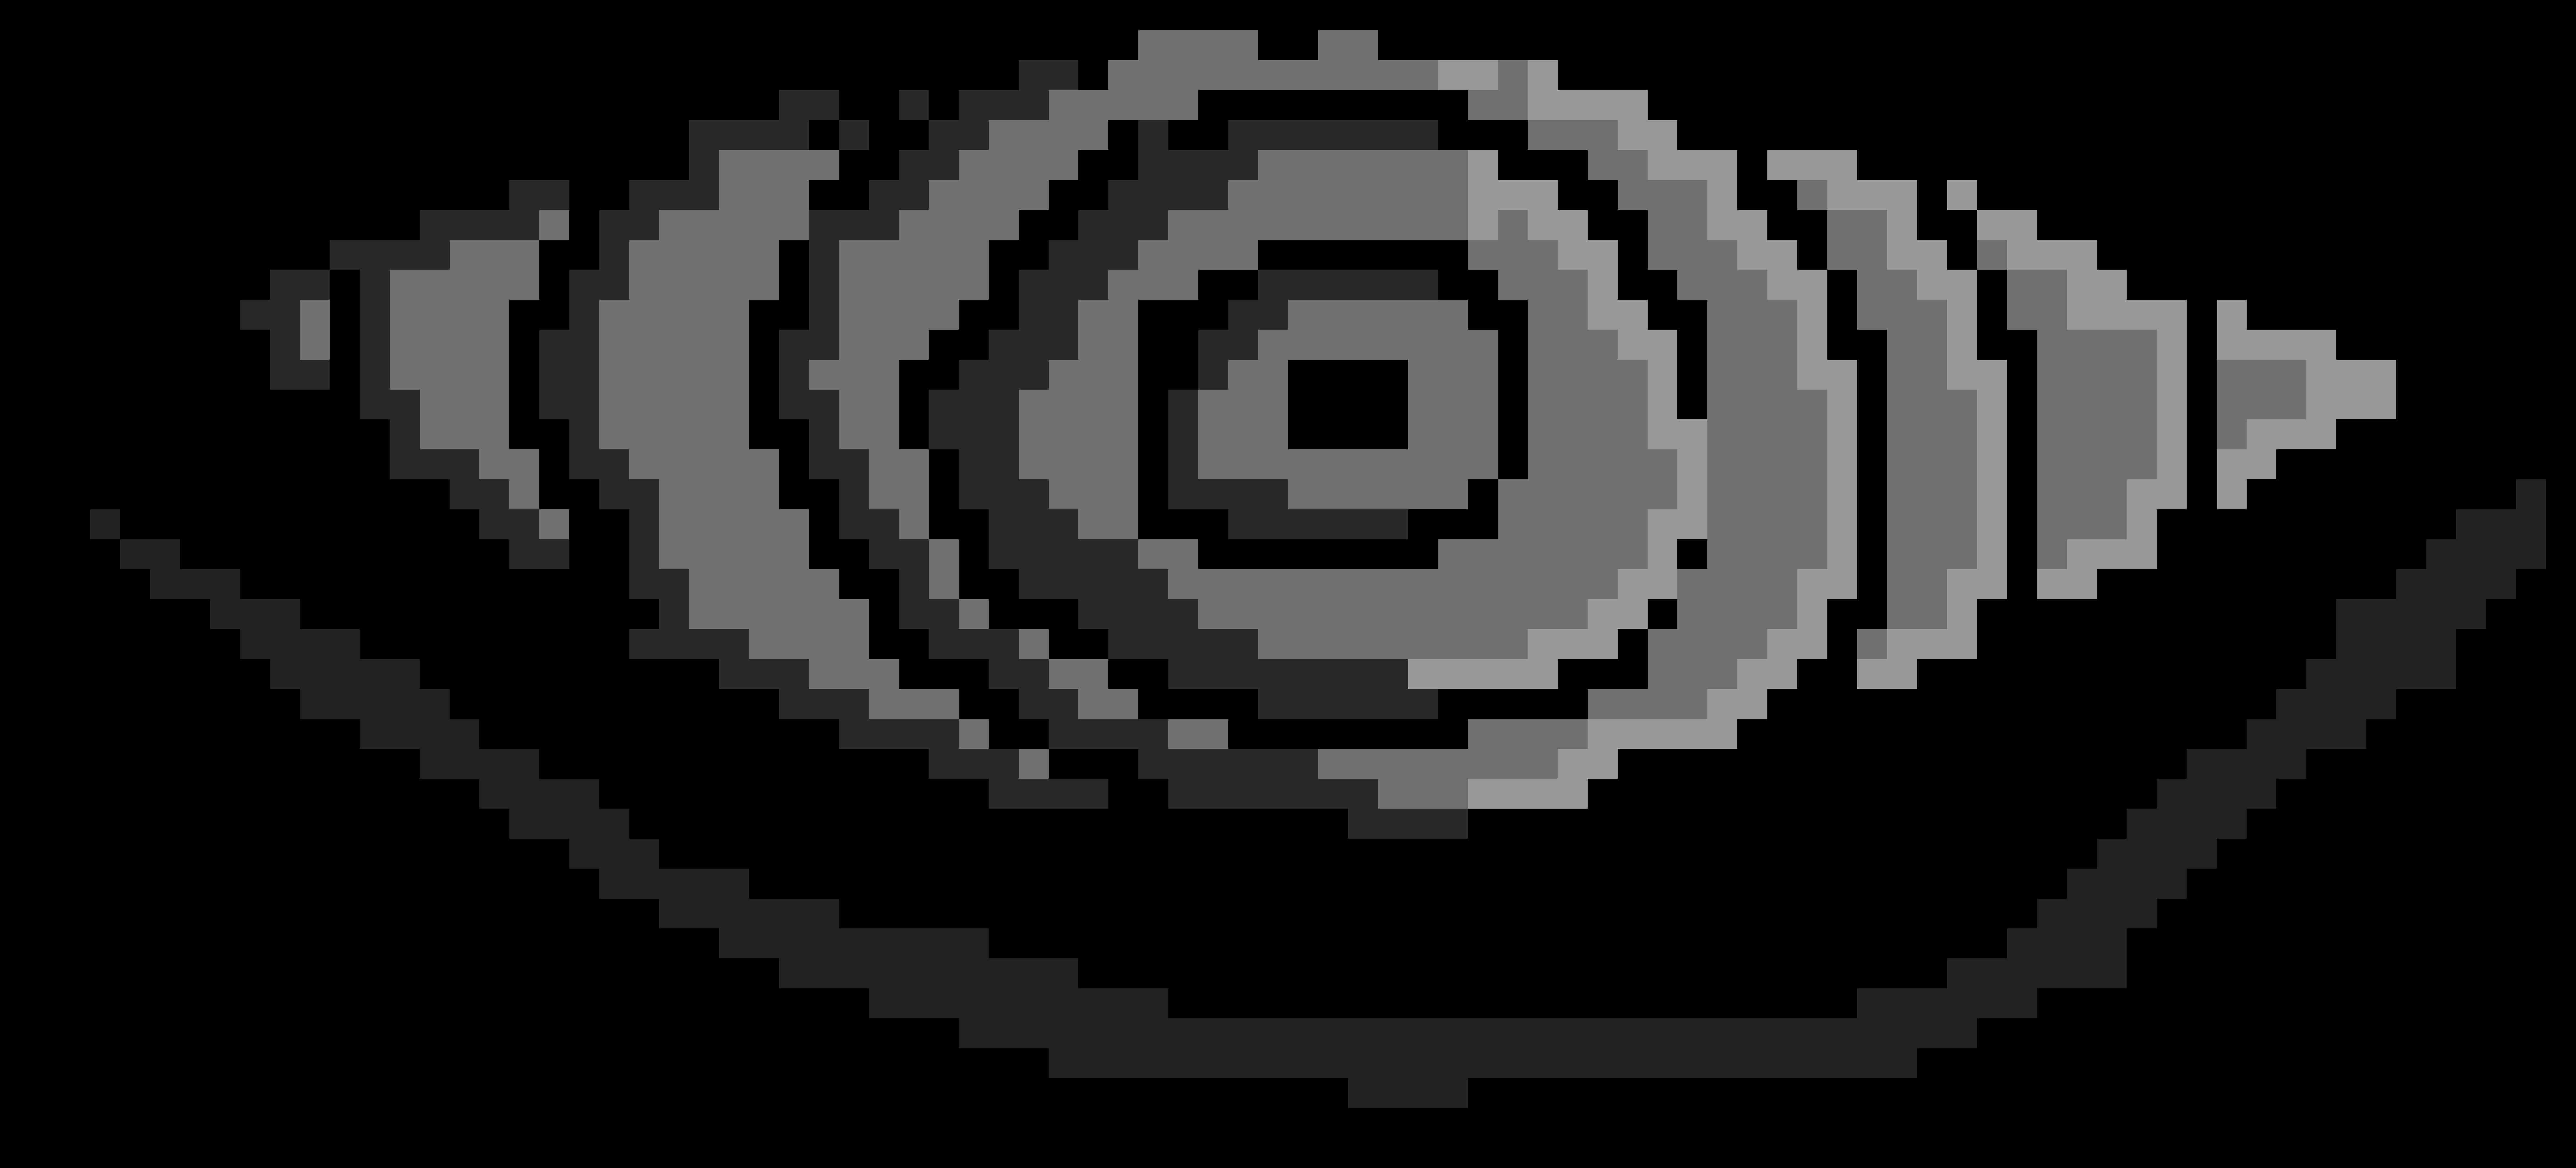 Rinnegan Eye Grayscale Pixel